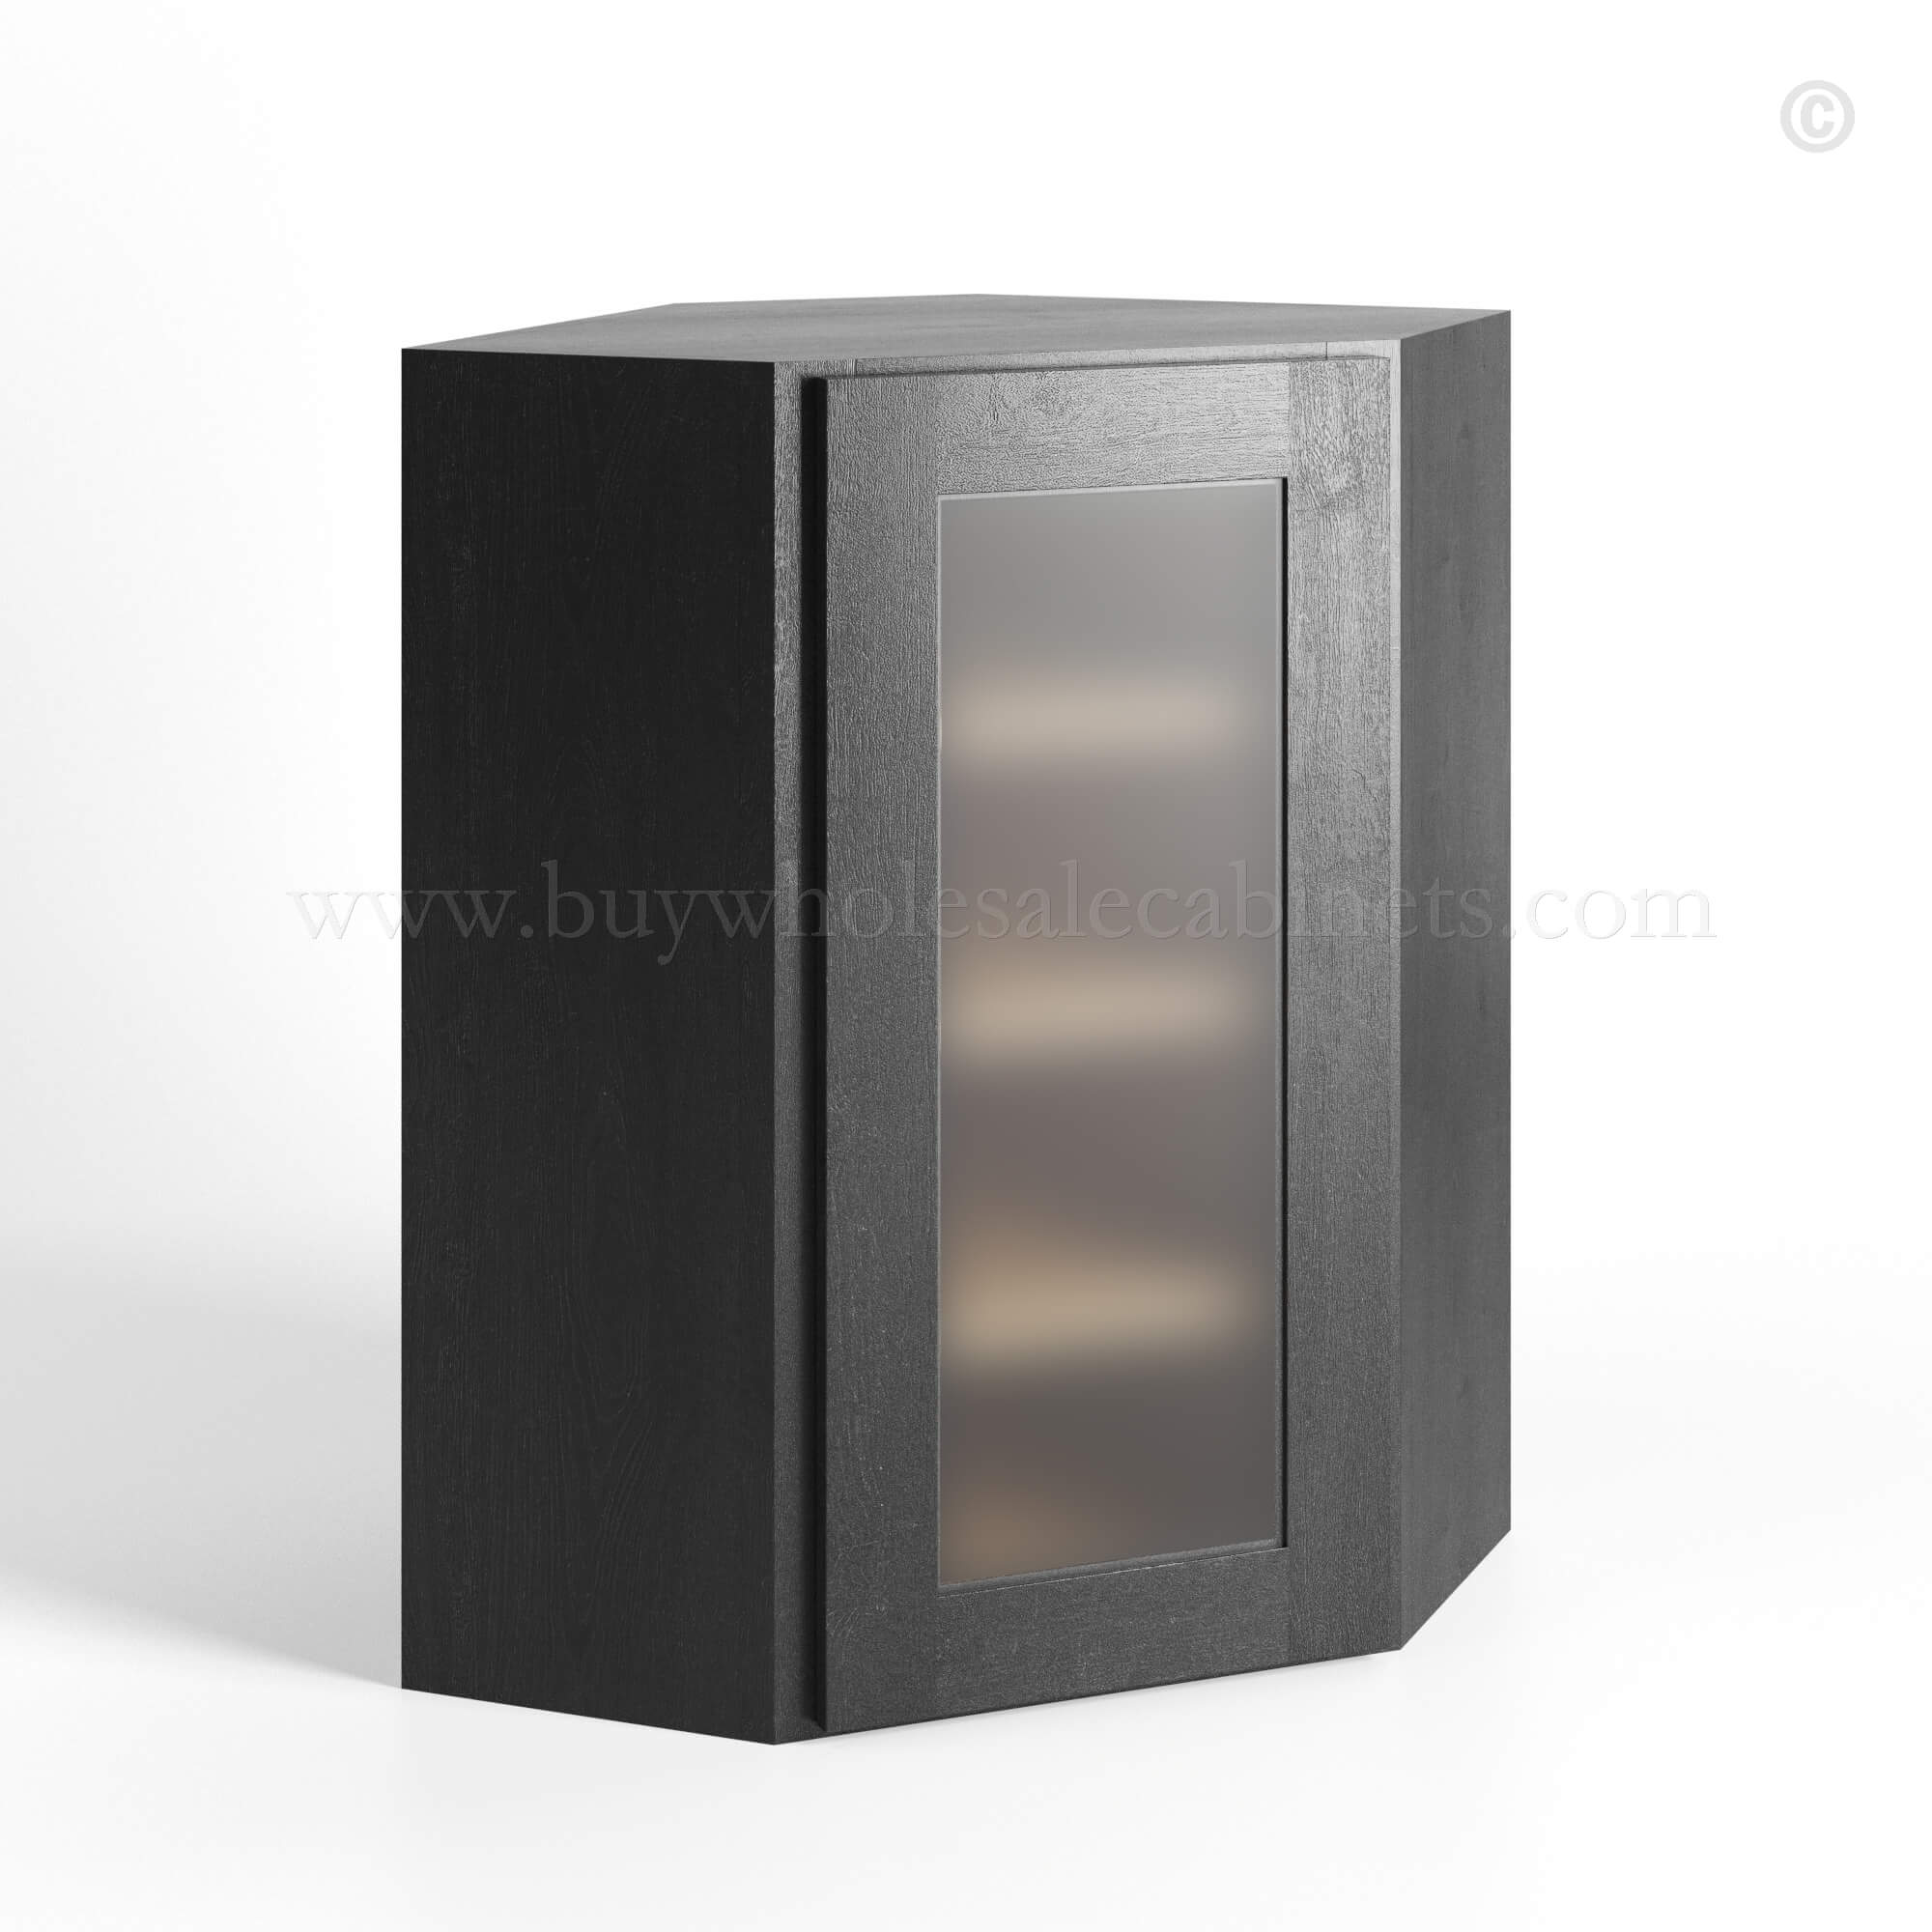 Charcoal Black Shaker Wall Diagonal Glass Corner, rta cabinets, wholesale cabinets